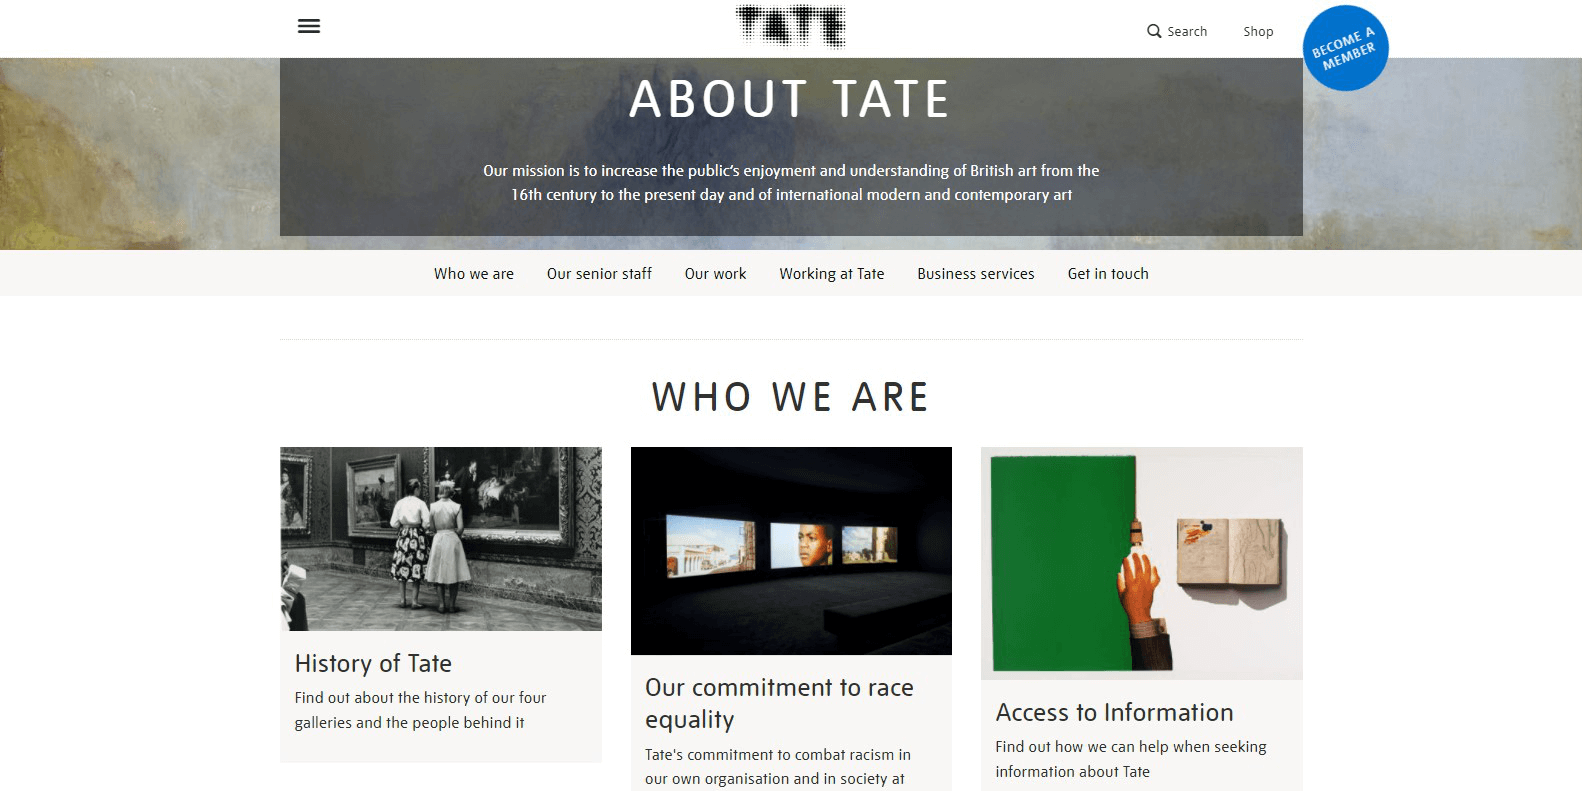 Tate About Us page